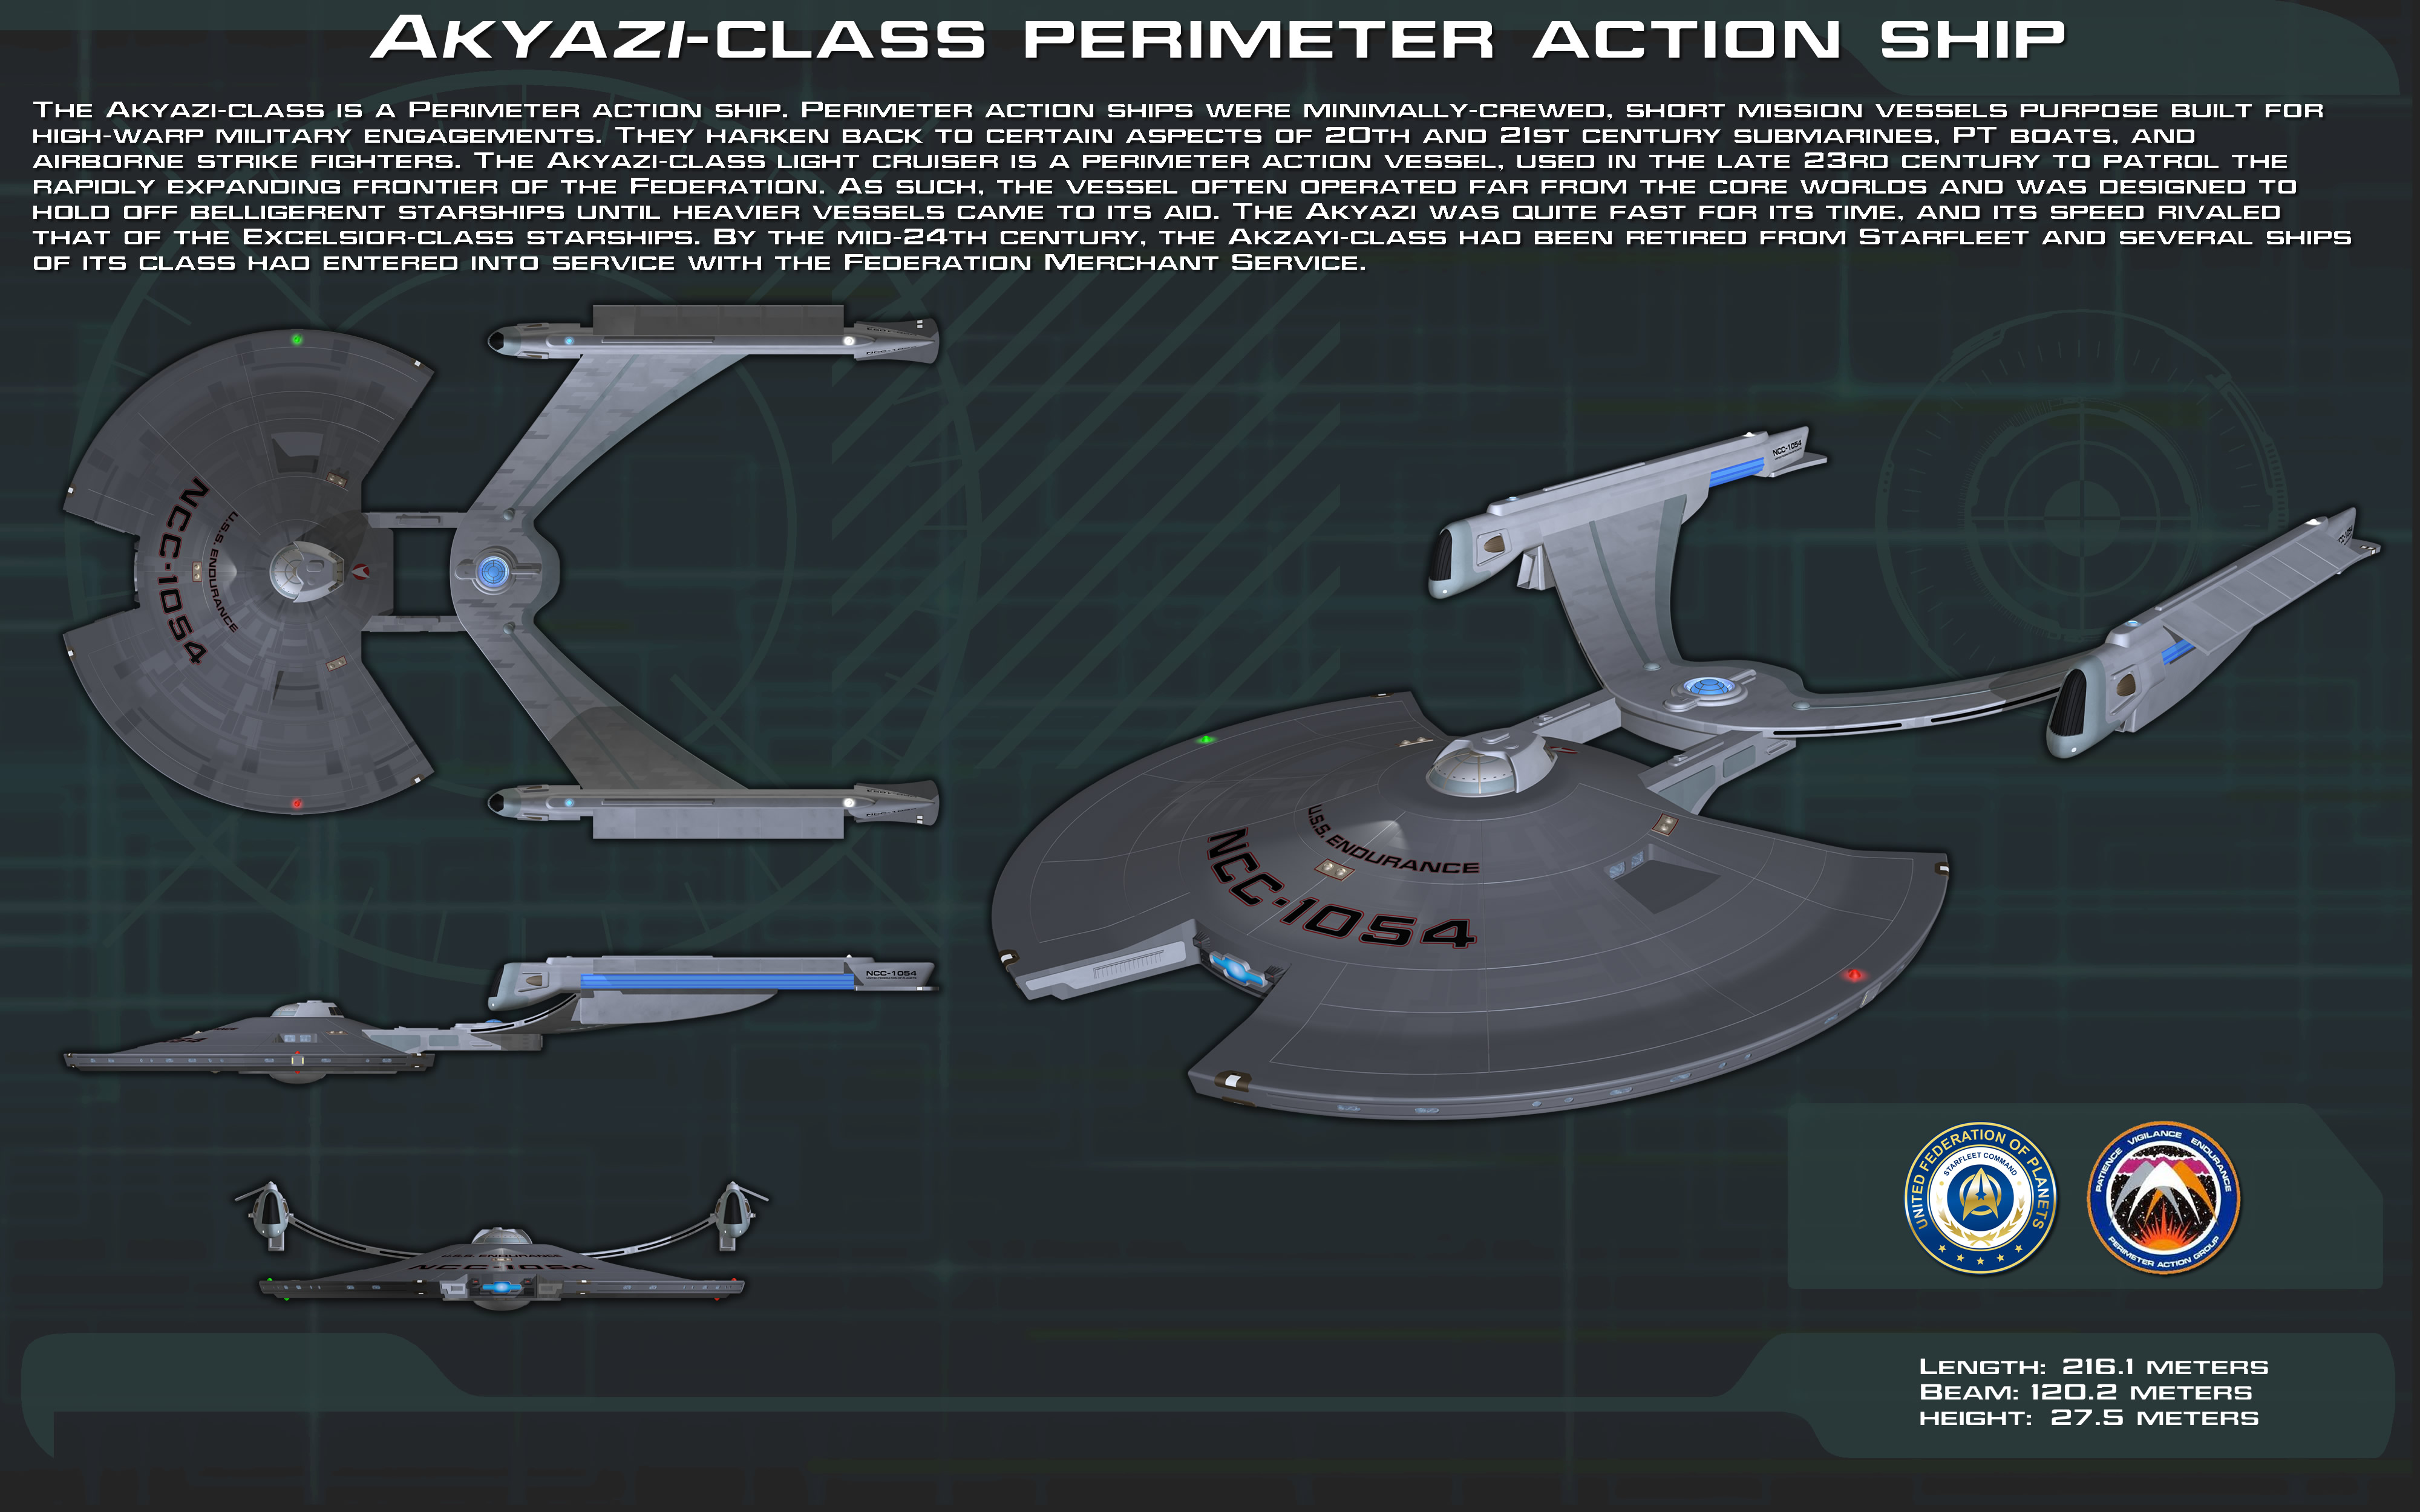 Akyazi-Class perimeter action ship ortho [New]